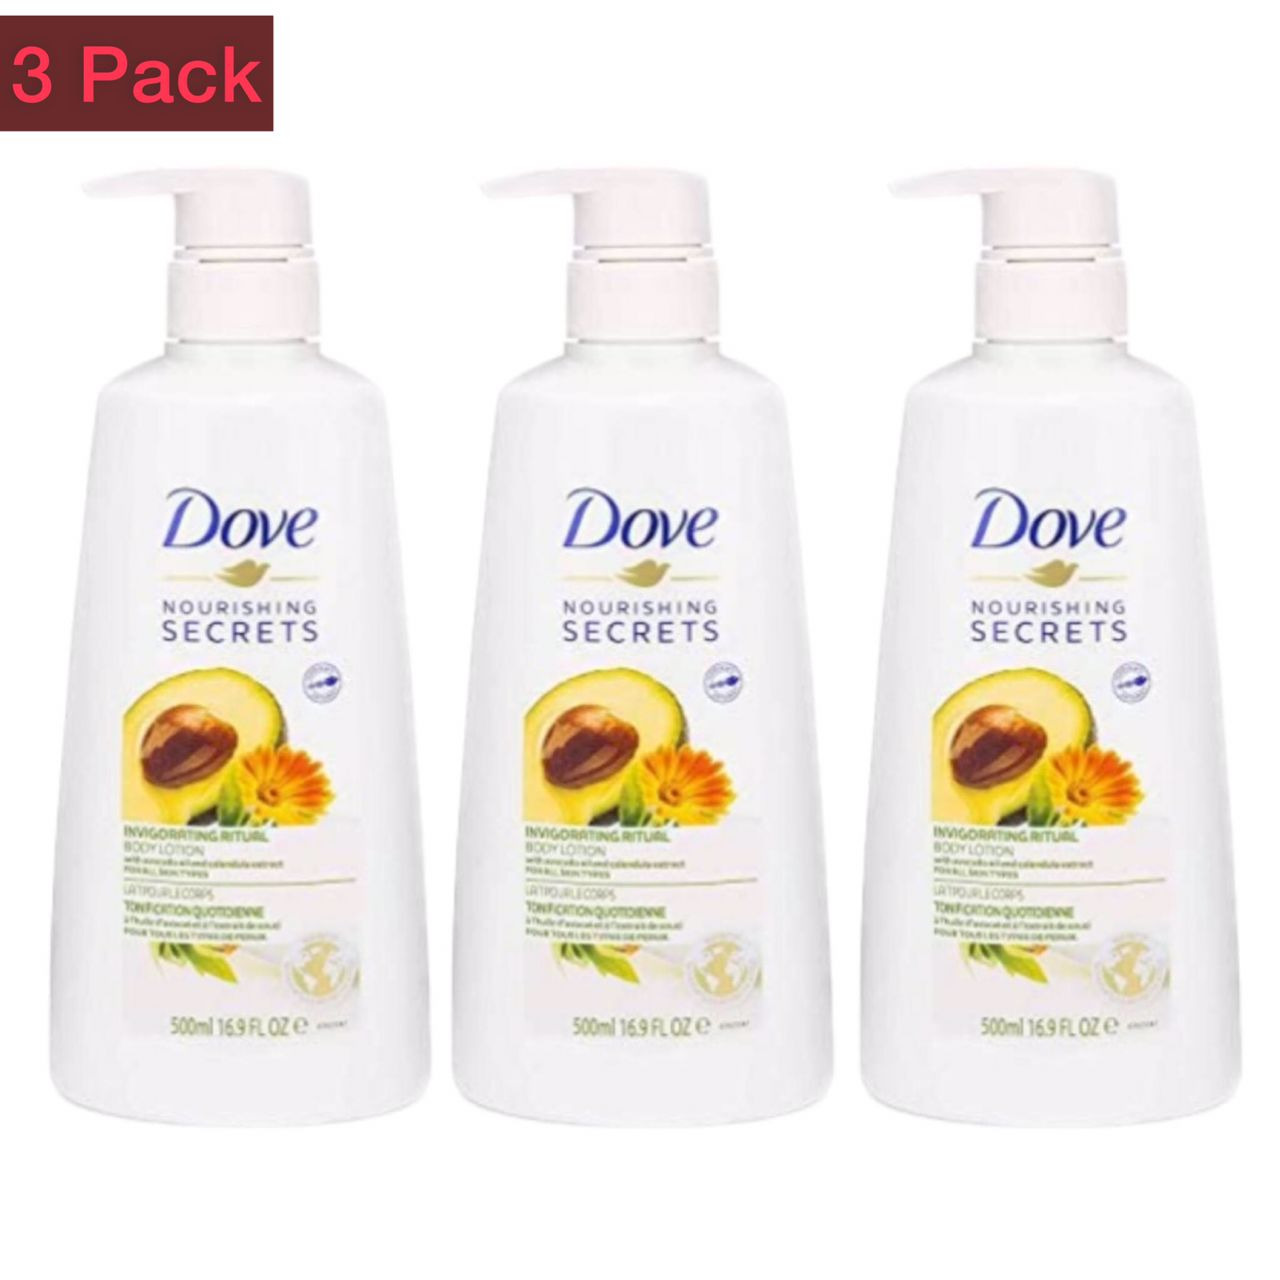 3 Pcs Bundle Dove Nourishing Secrets Invigorating Body Lotion, Dry Skin Relief for Women with Avocado Oil and Calendula Extract, 16.9 FL OZ Pump Bottle (3X500ml) (Cargo)